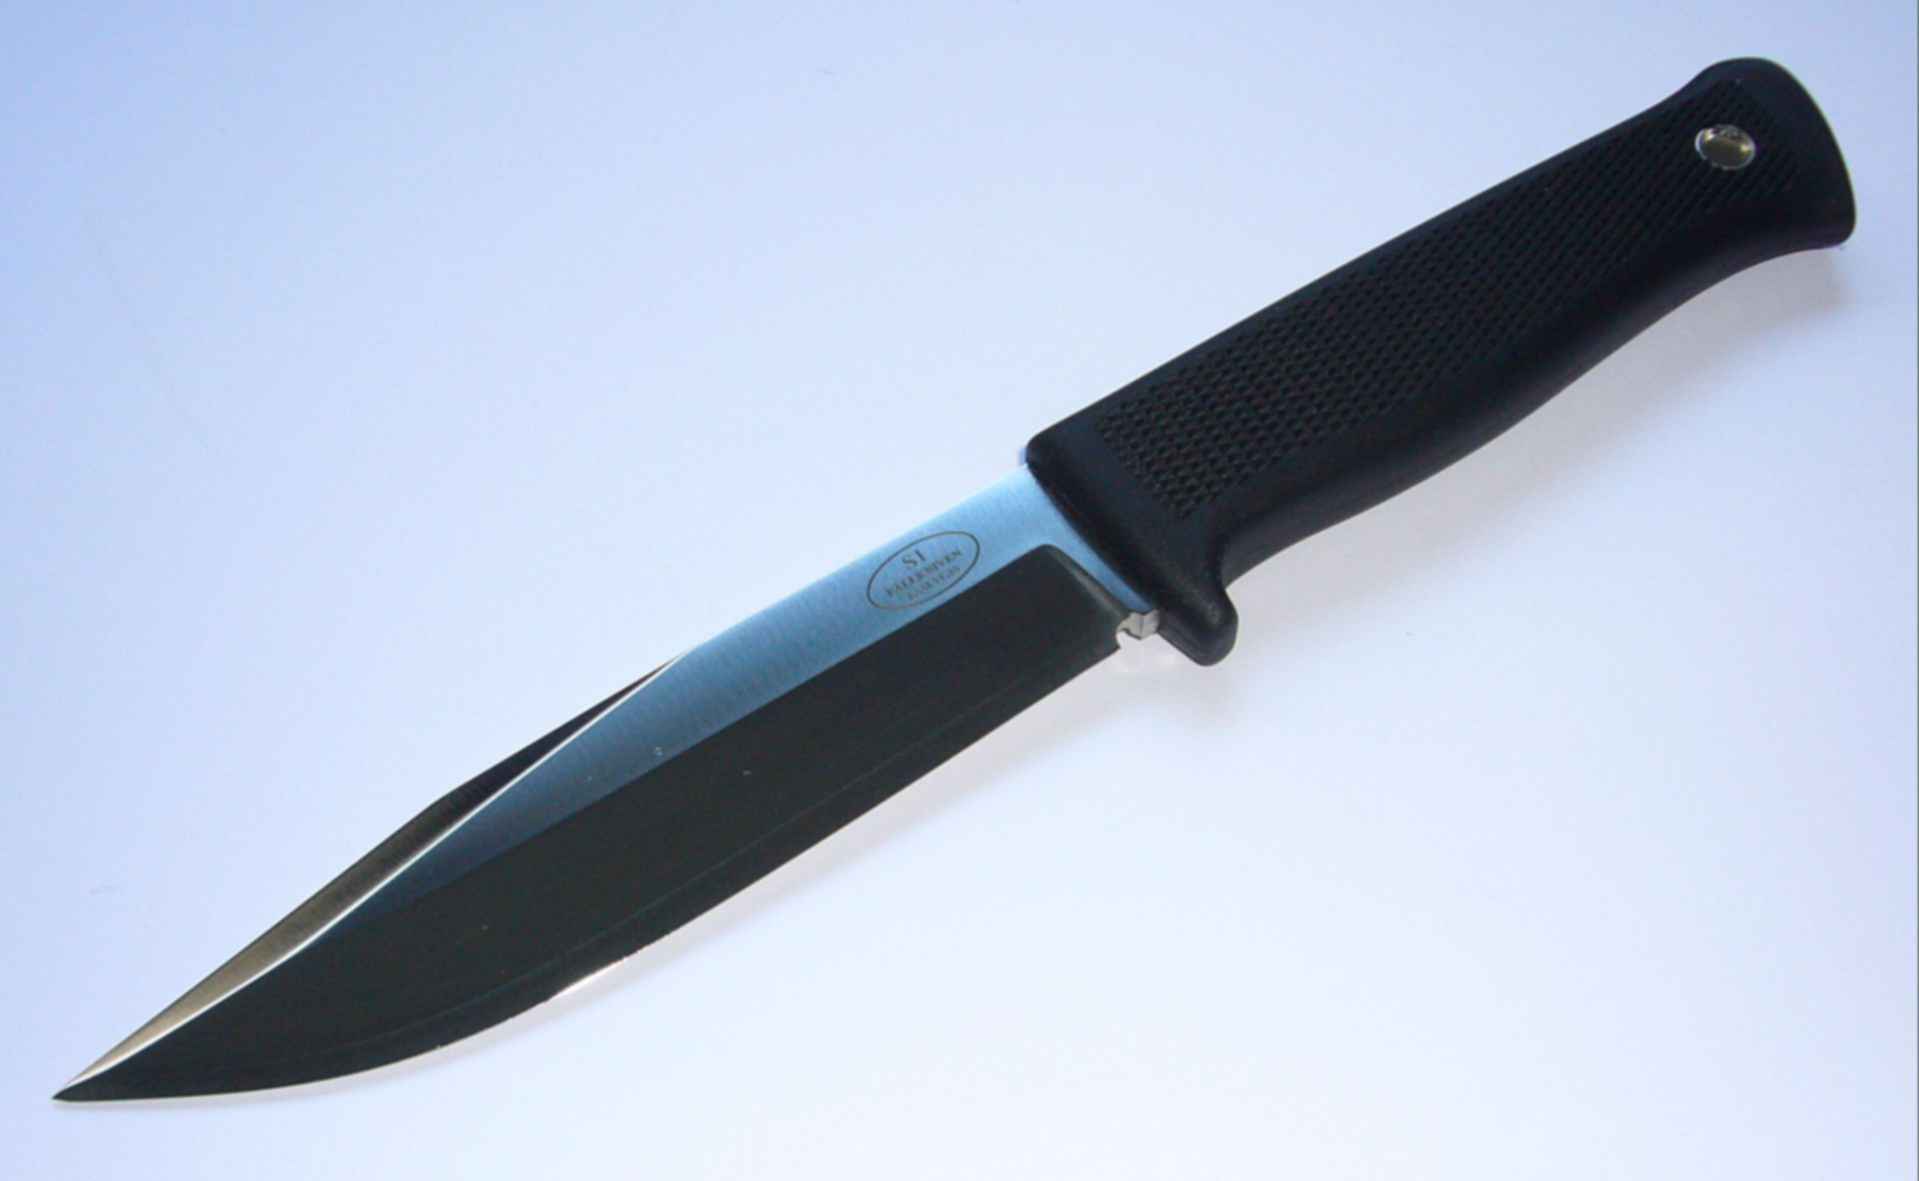 Купить нож. Купить нож KESIWO Predator j129 g10. Канарский нож купить. Нож купить в Кишиневе. Ножи купить в пензе